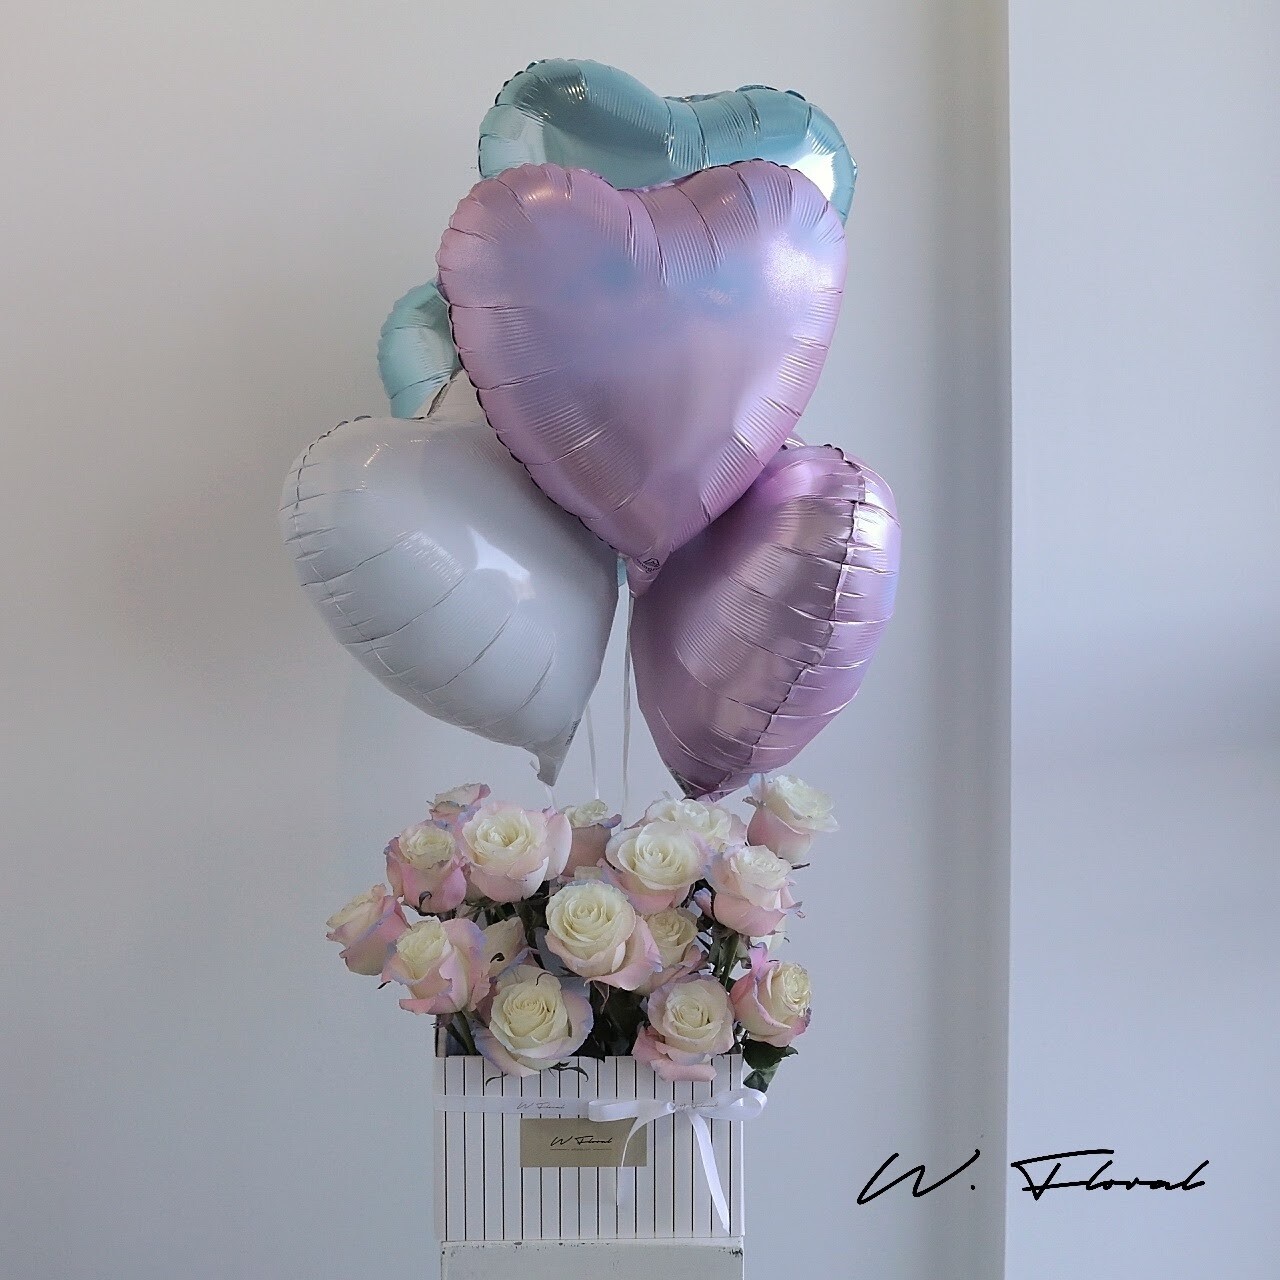 W Pandora Hug Rose & Balloon - Muse Aurora